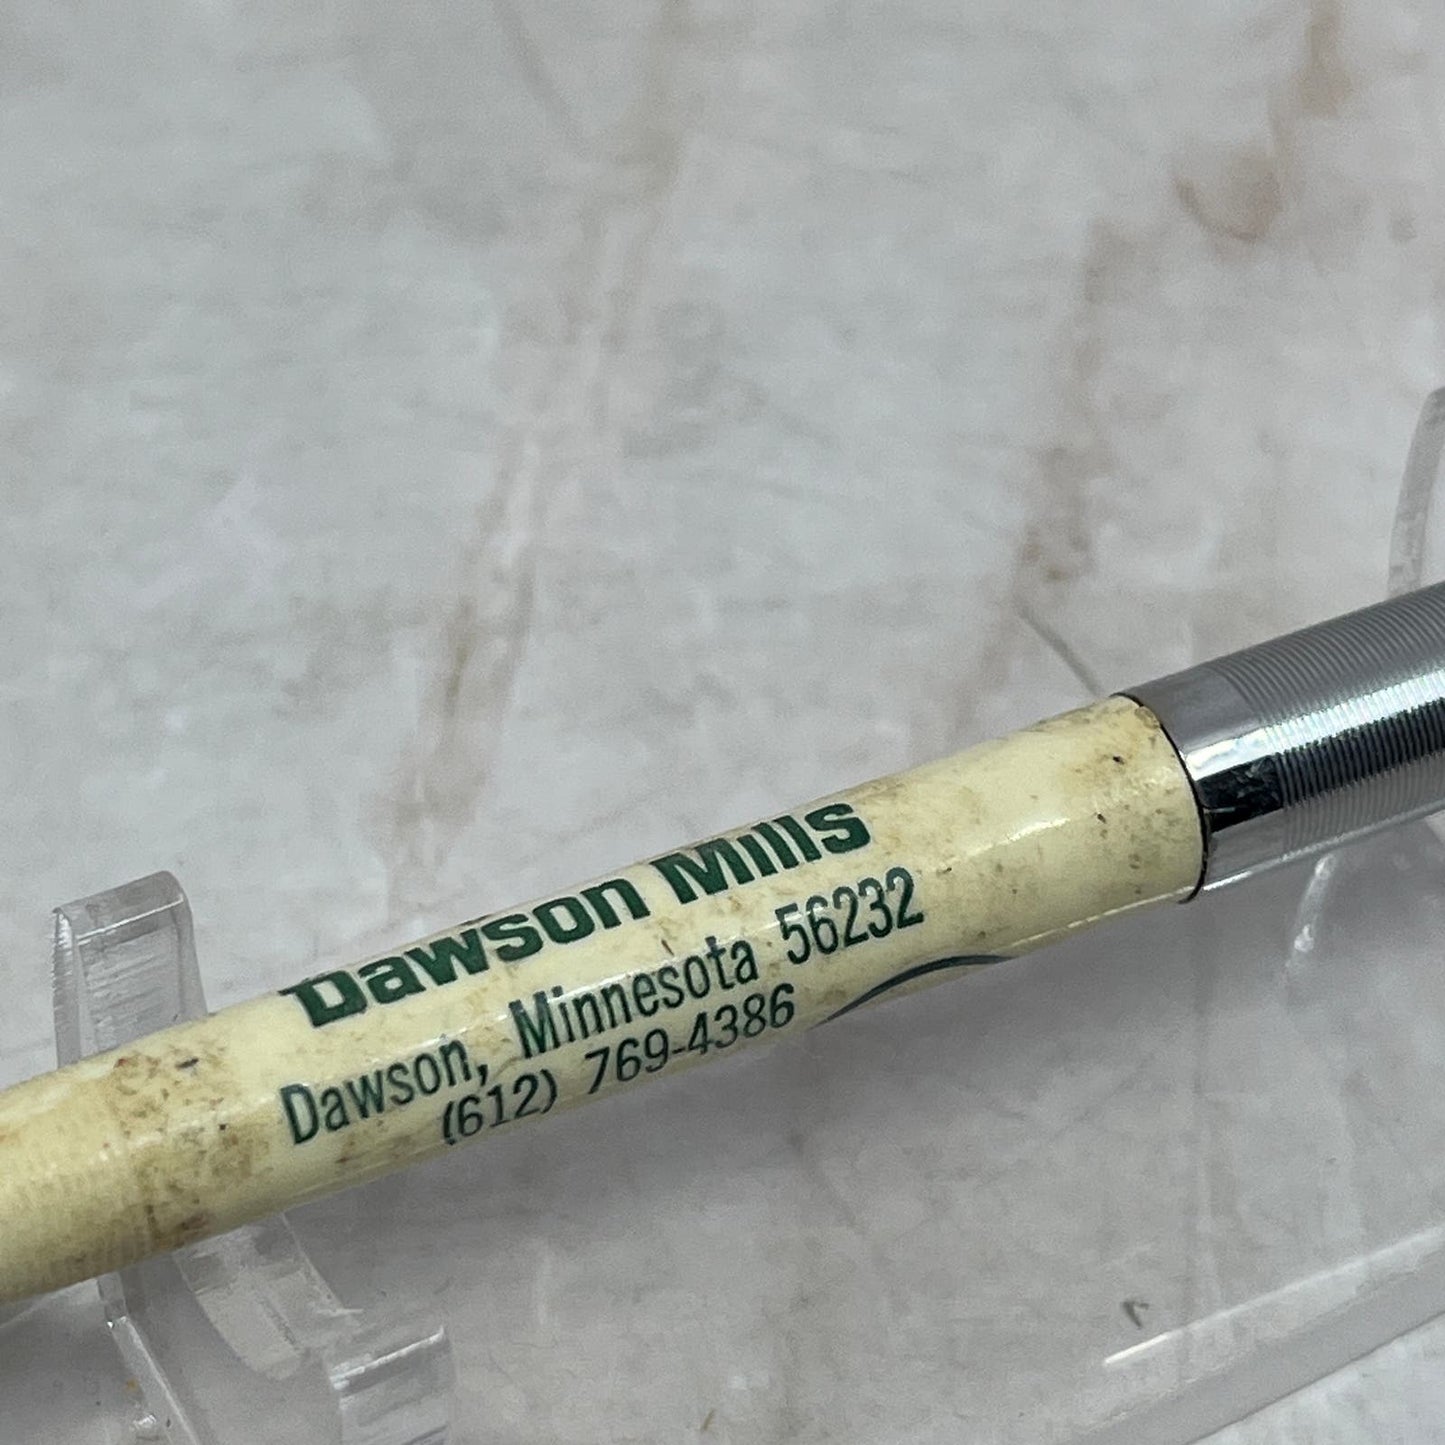 Dawson Mills Soybeans Dawson MN Vintage Advertising Mechanical Pencil SB3-P2